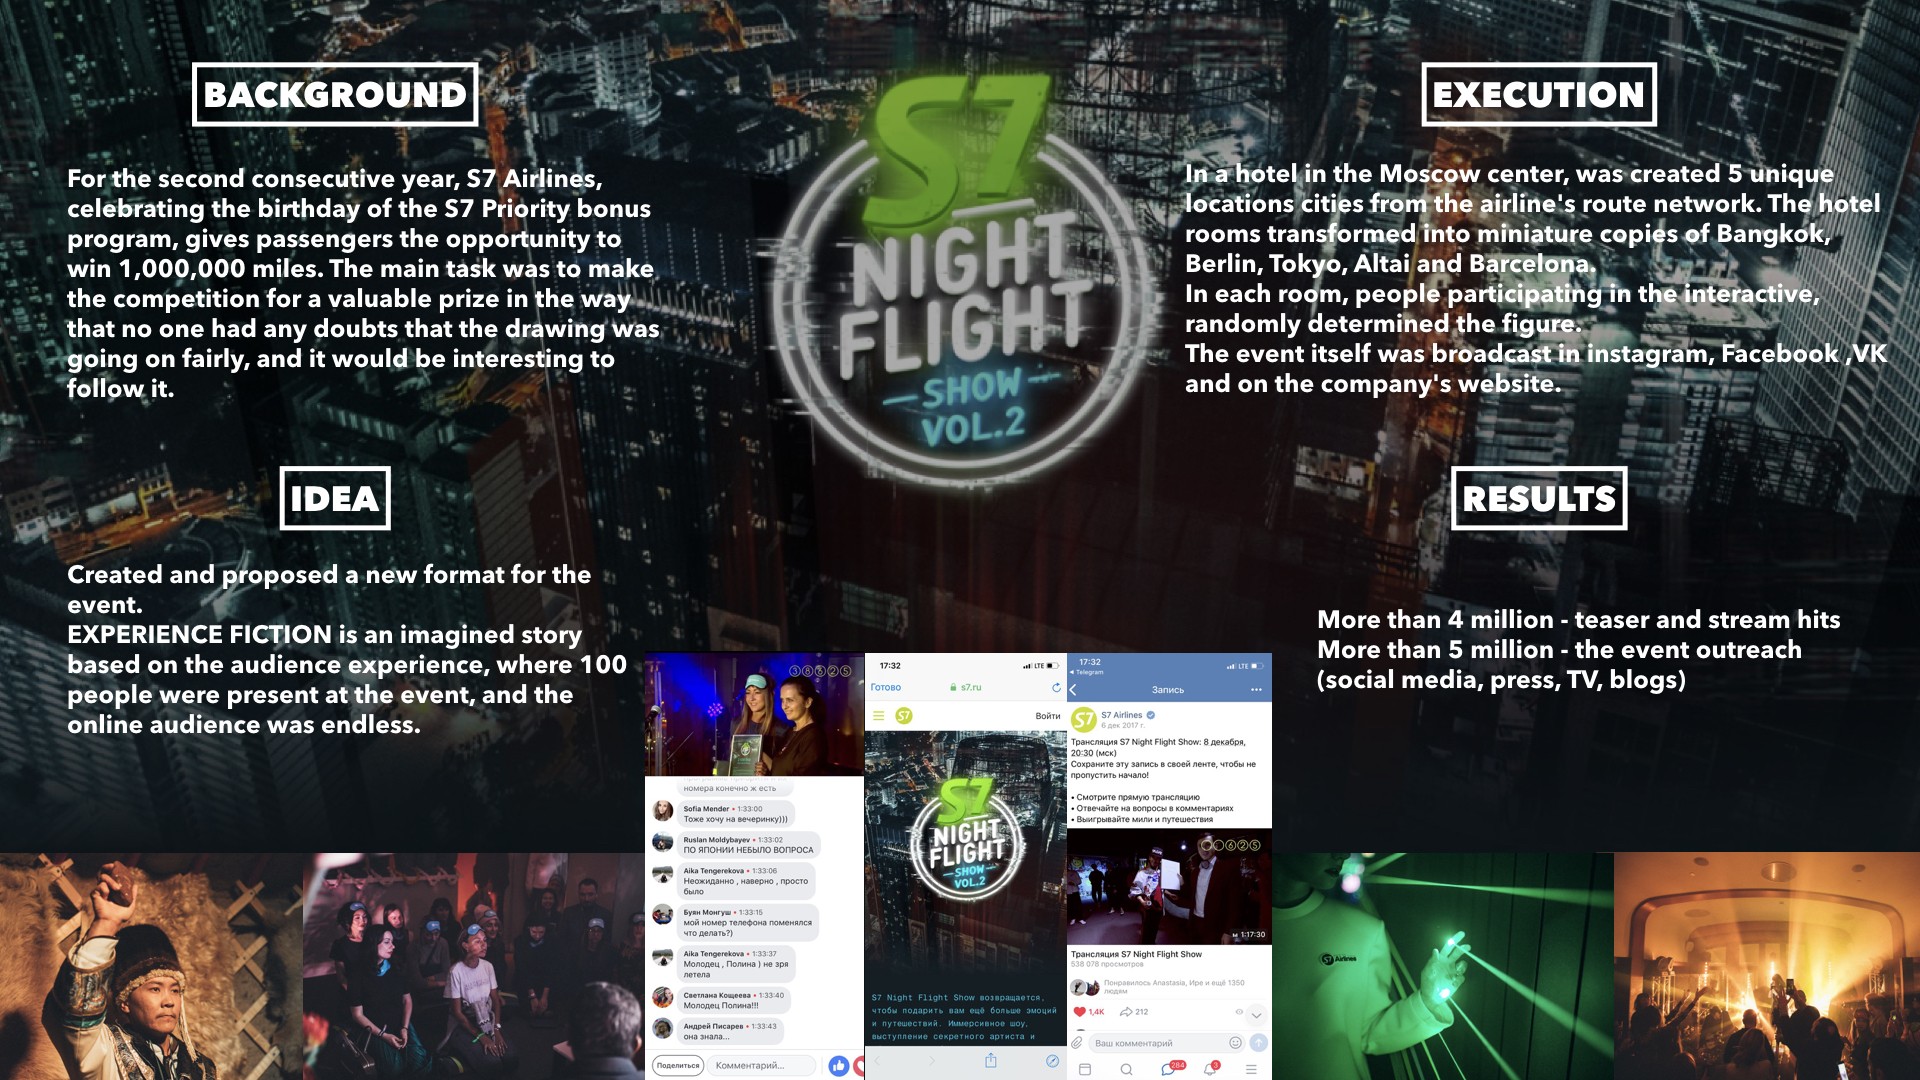 Night Flight Show vol.2